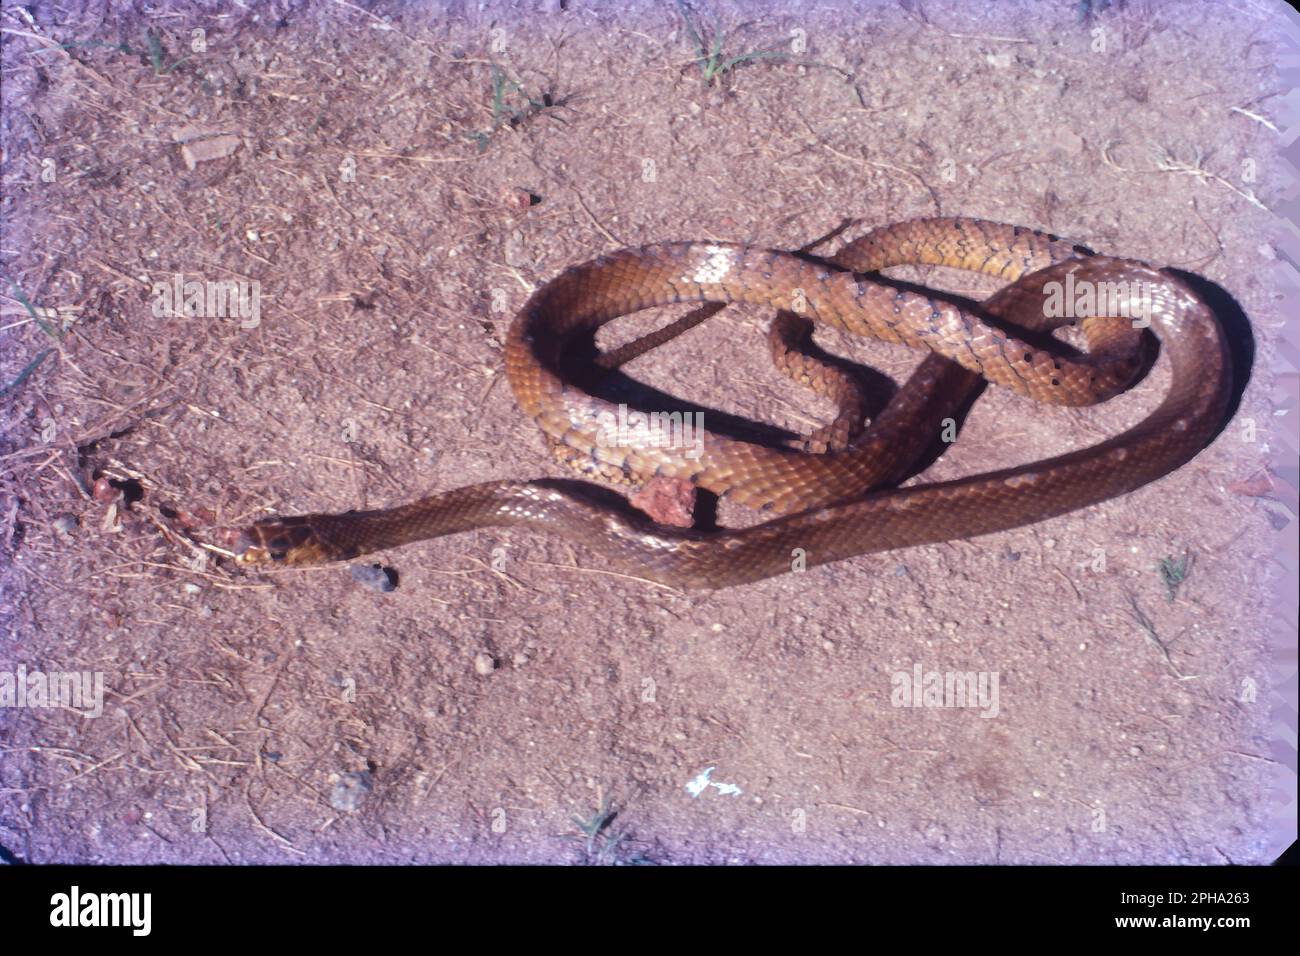 spectacled cobra (Naja naja), saw-scaled viper (Echis carinatus), Russell's viper (Daboia russelii) and common krait (Bungarus caeruleus). Stock Photo